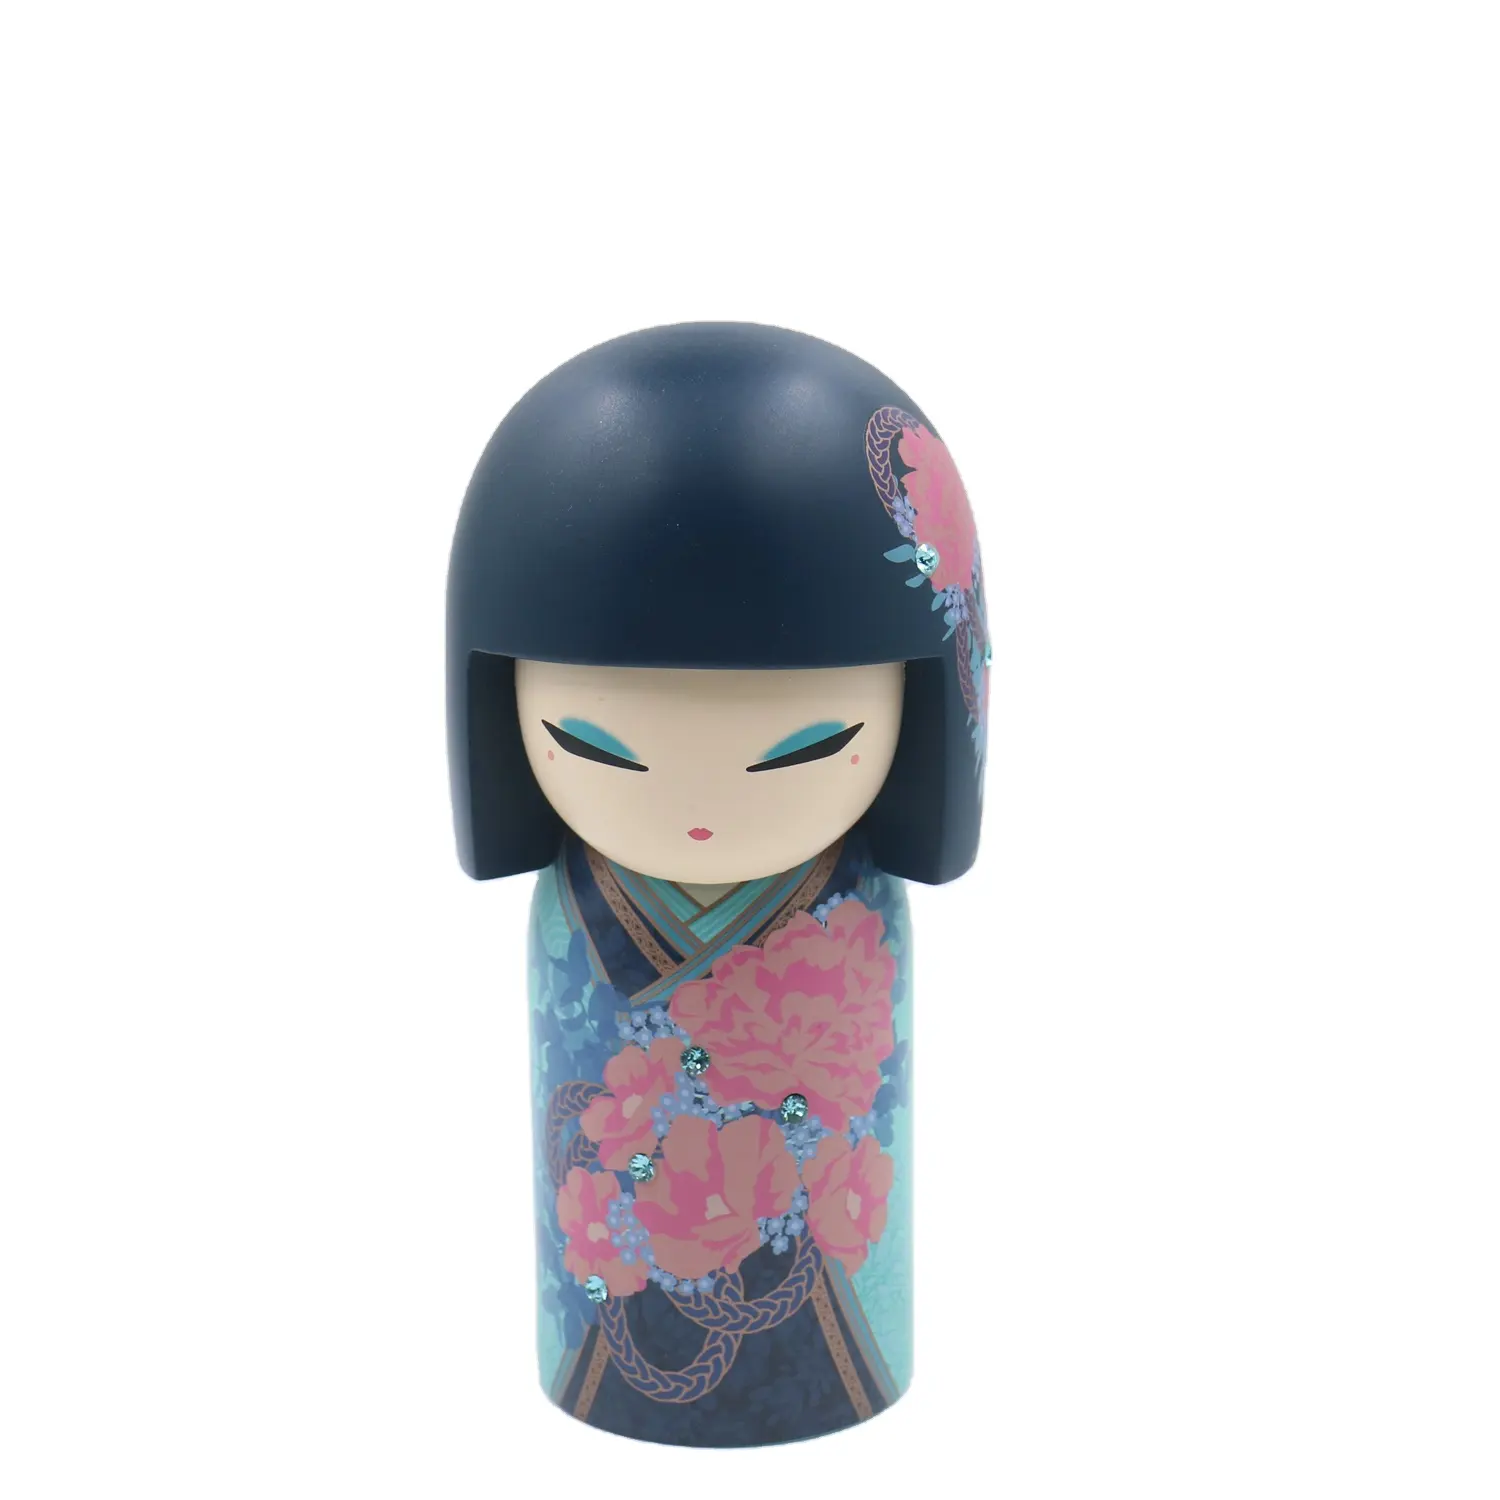 Boneco de resina de kimono japonês personalizado, boneco artístico fofo de menina